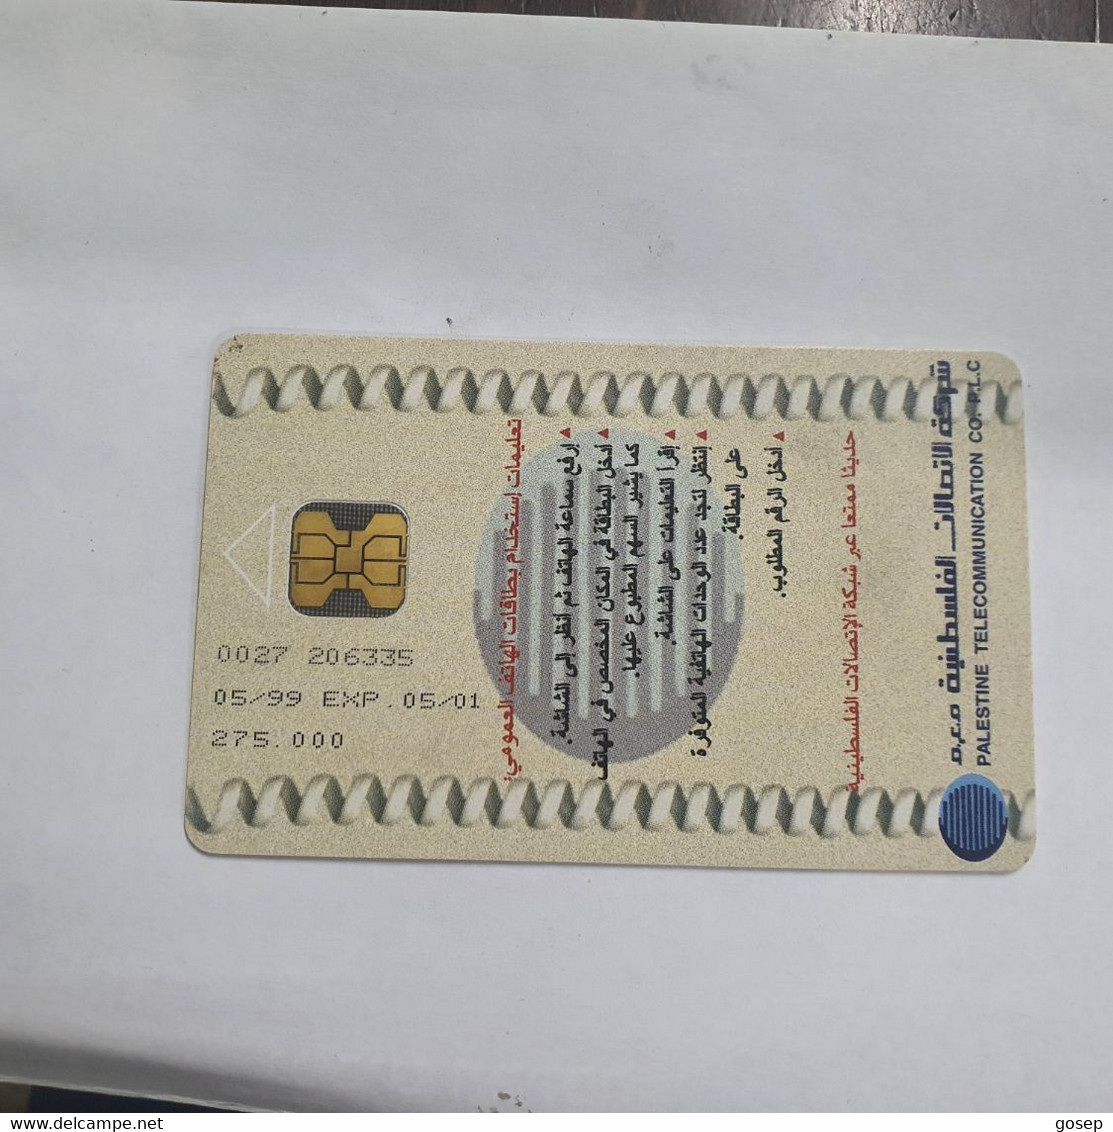 Plastine-(PS-PAL-0005C)-Bridal Dress From Yazour-(445)-(5/1999)(15₪)(0027-206335)-used Card+1card Prepiad Free - Palestine